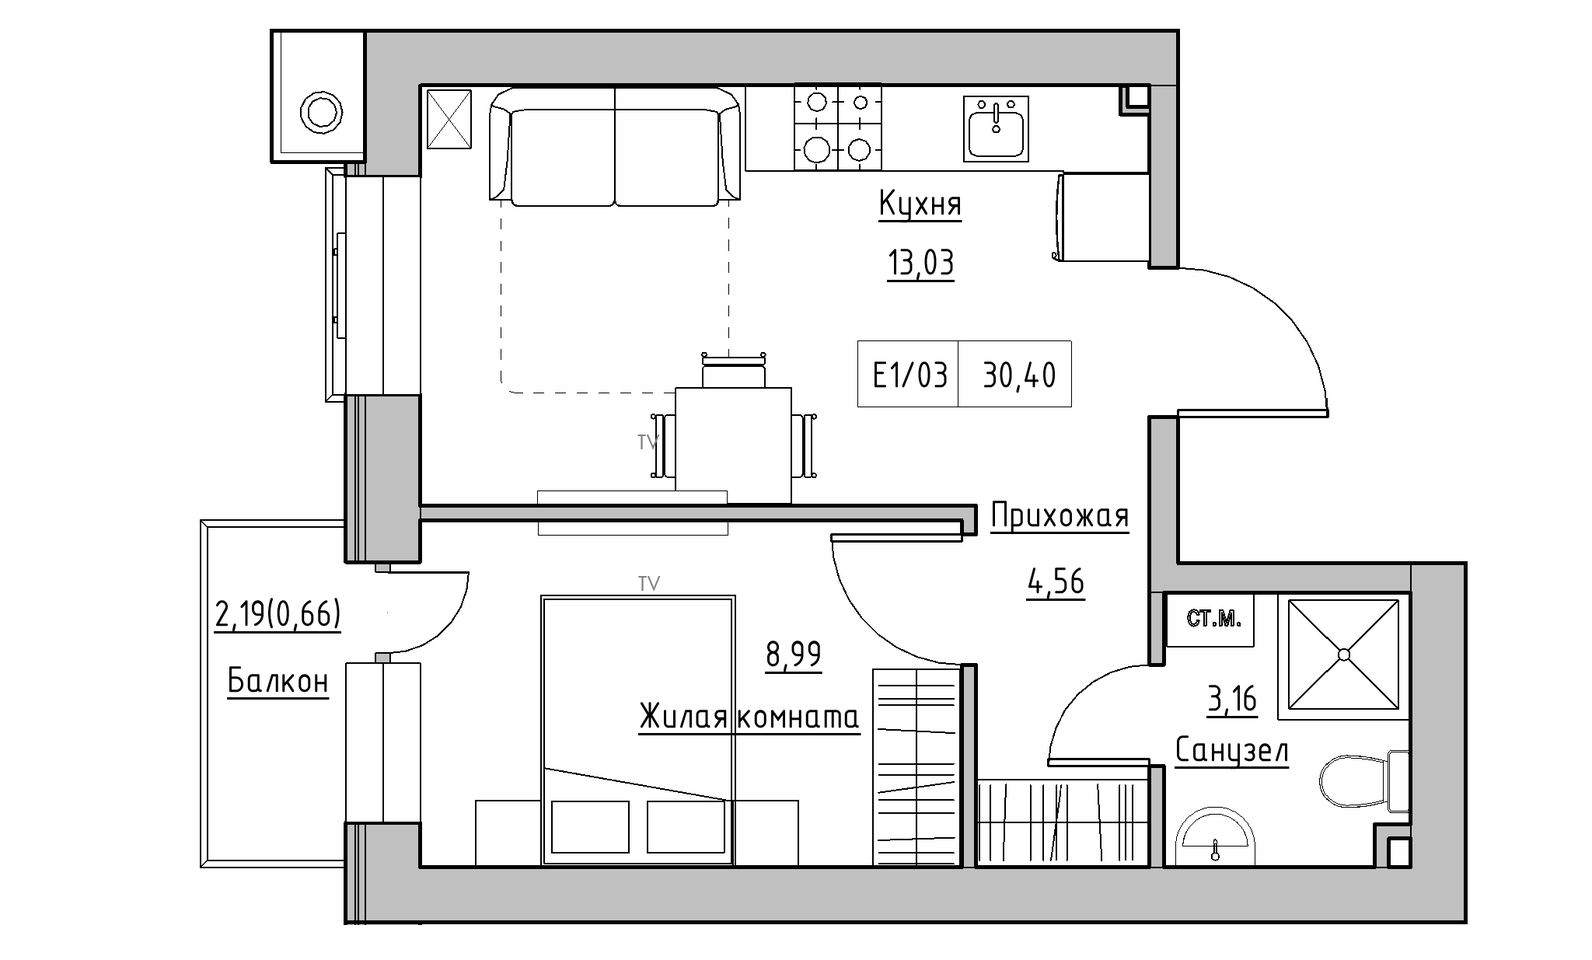 Planning 1-rm flats area 30.4m2, KS-014-05/0015.